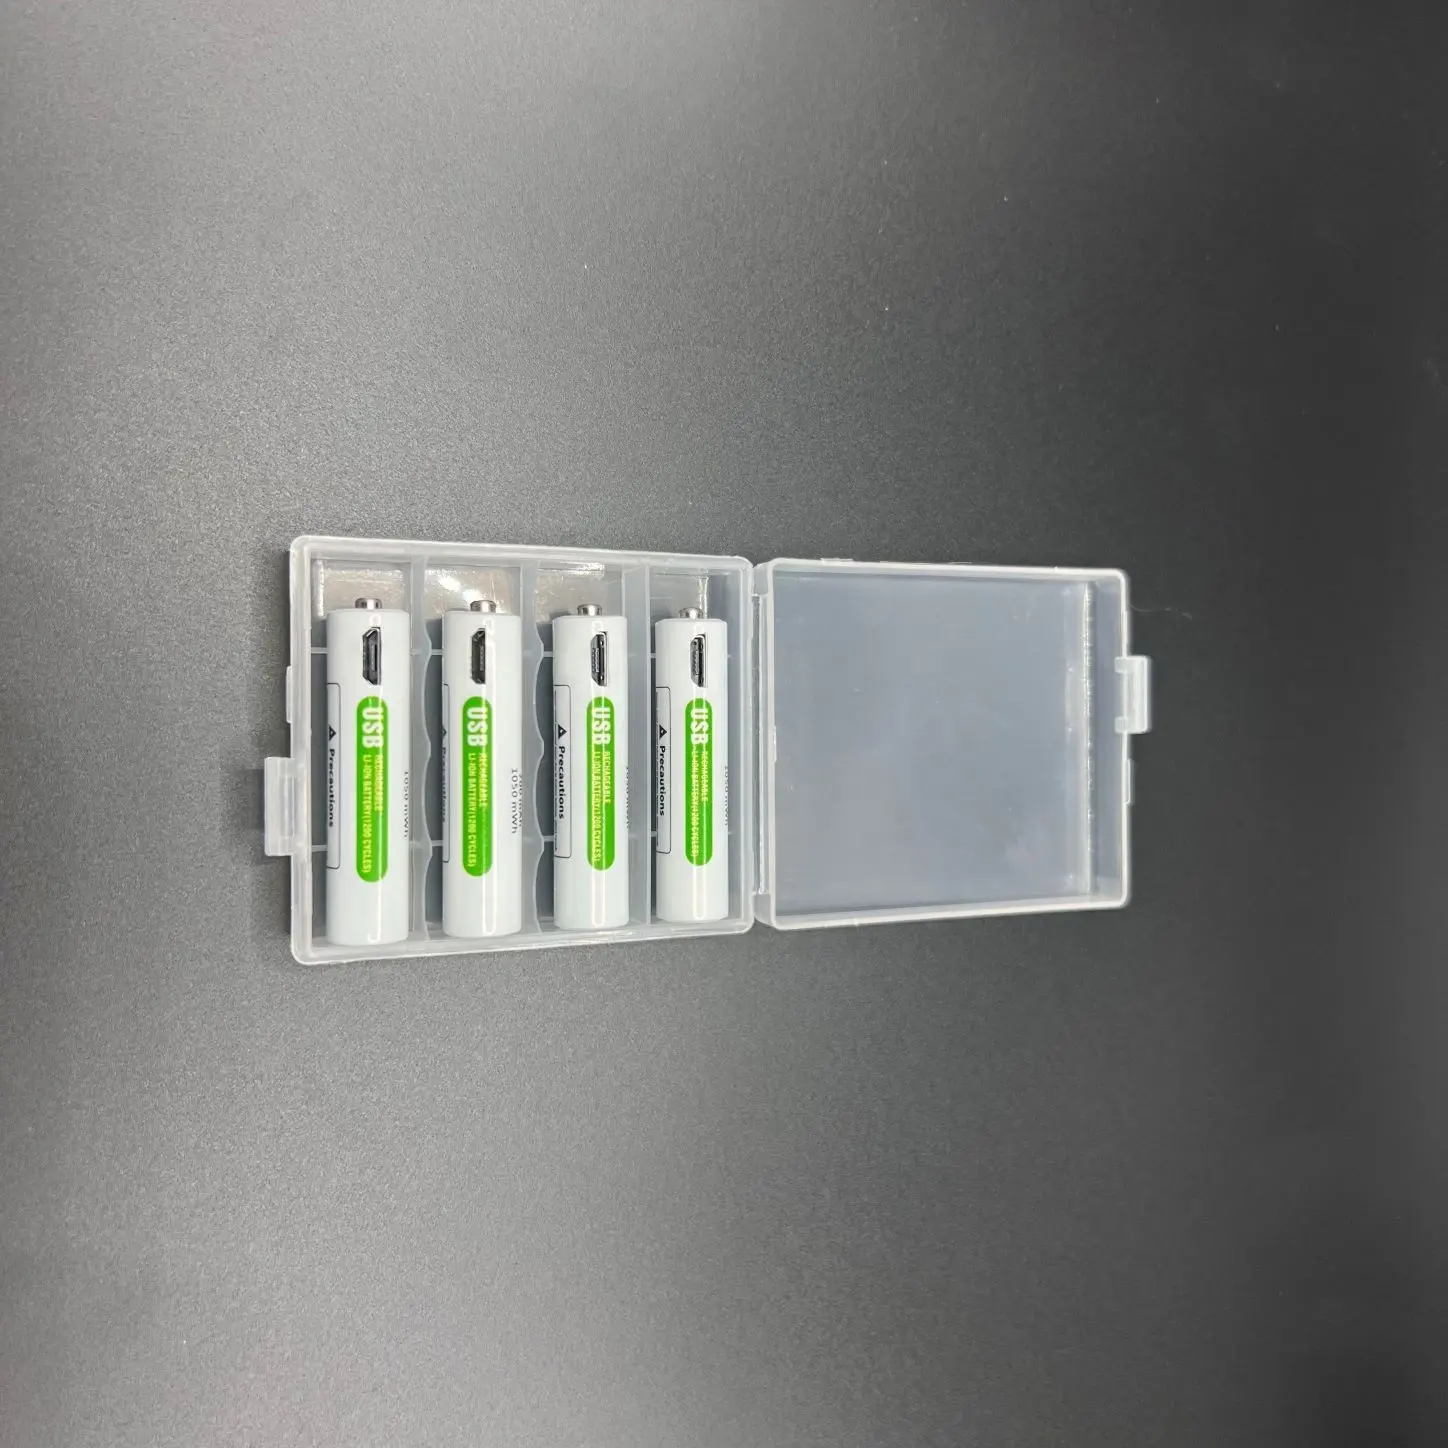 Micro batterie ricaricabili agli ioni AAA batteria ricaricabile al litio Aaa batteria per microfono di ricarica Usb